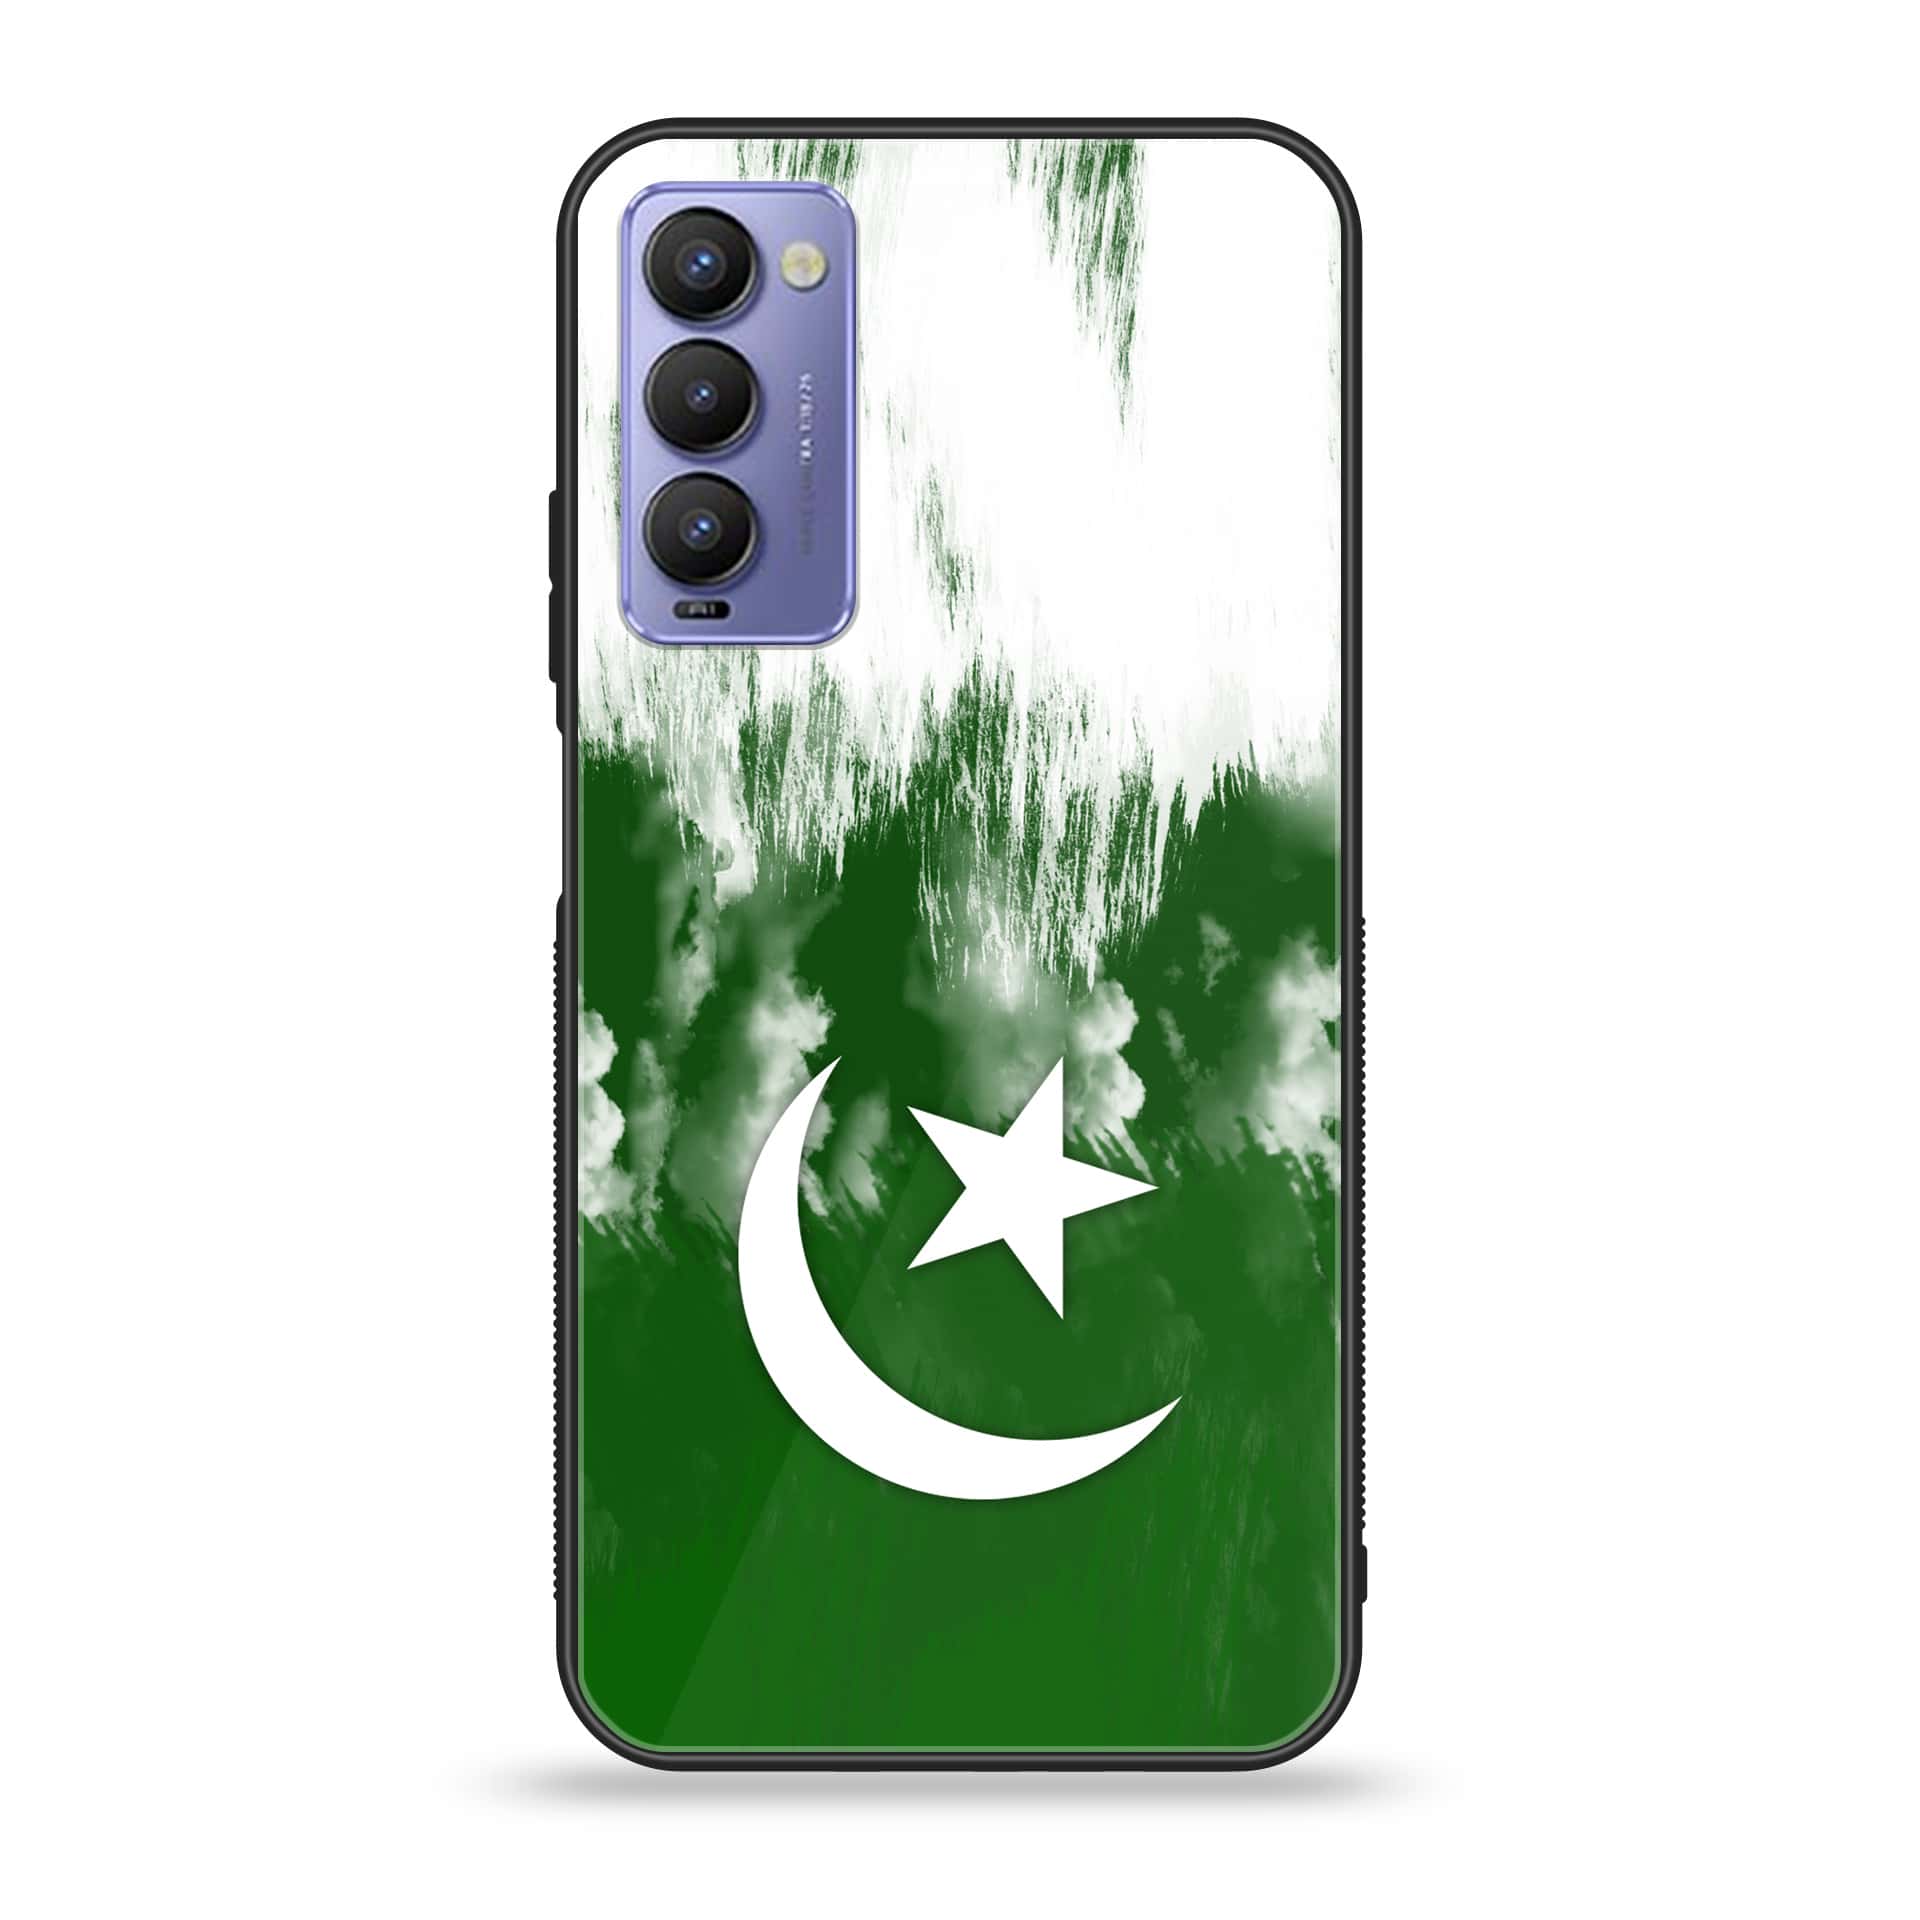 Tecno Camon 18 Pakistani Flag Series Premium Printed Glass soft Bumper shock Proof Case